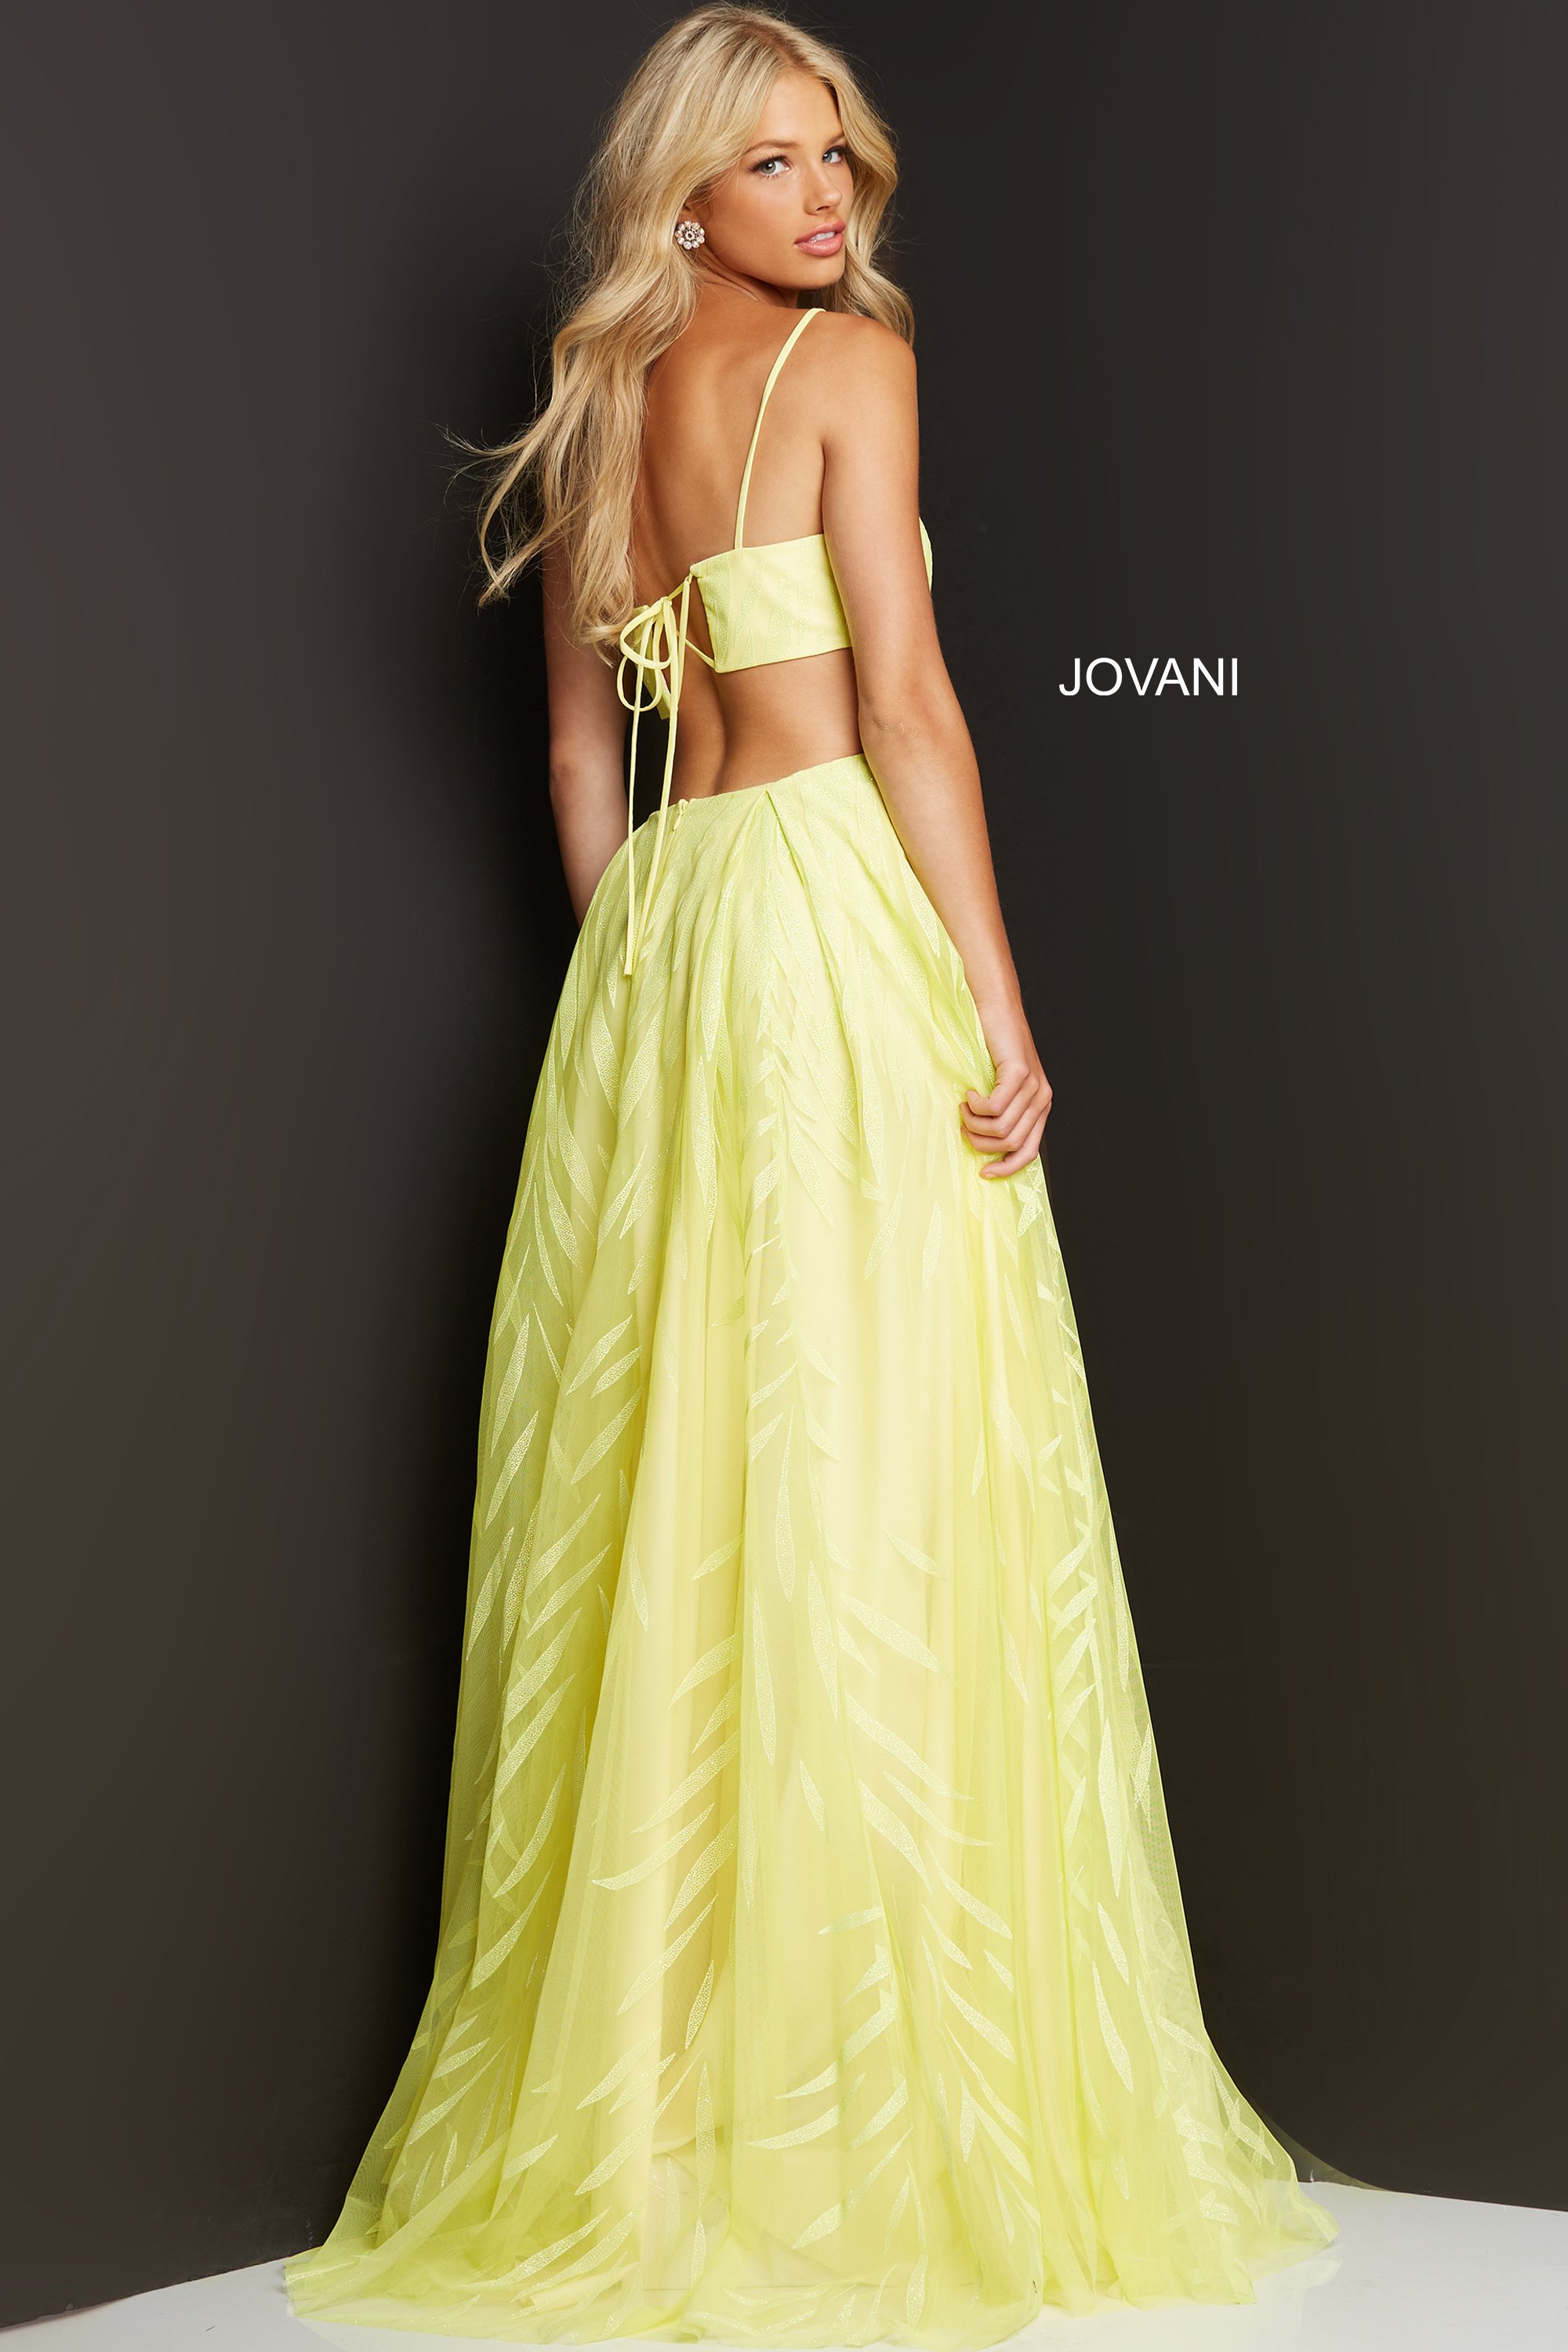 Jovani — The Prom Shoppe